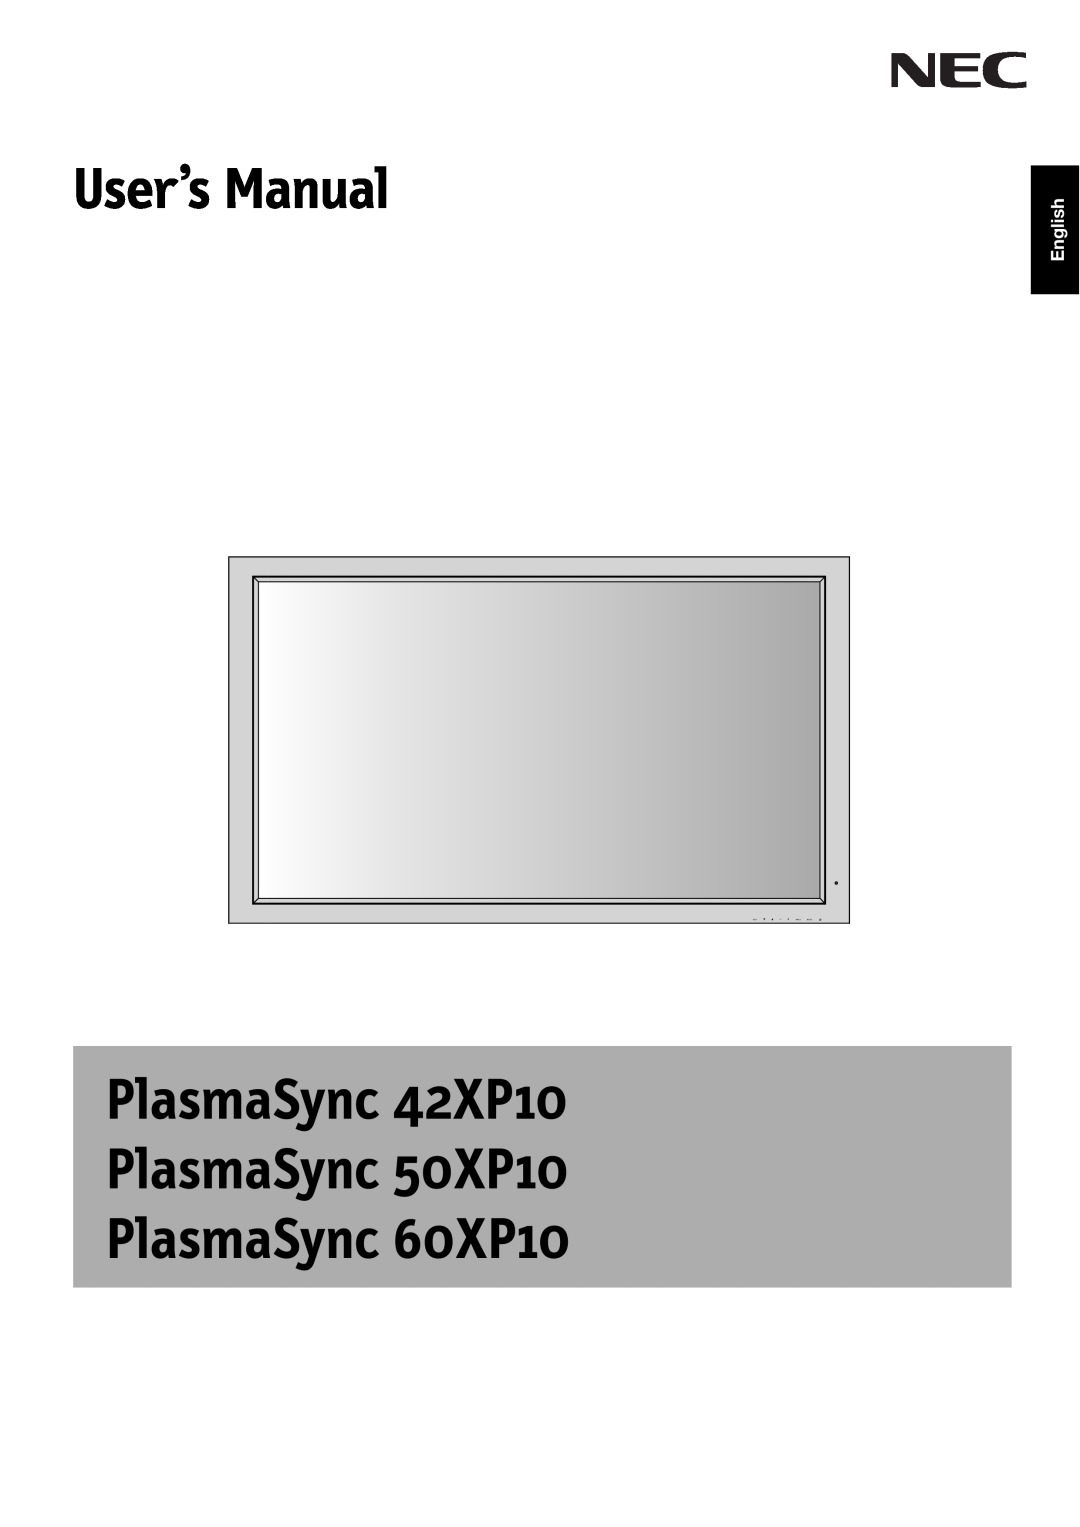 NEC user manual User’s Manual, PlasmaSync 42XP10 PlasmaSync 50XP10 PlasmaSync 60XP10, English, Exit, Input, Mute 